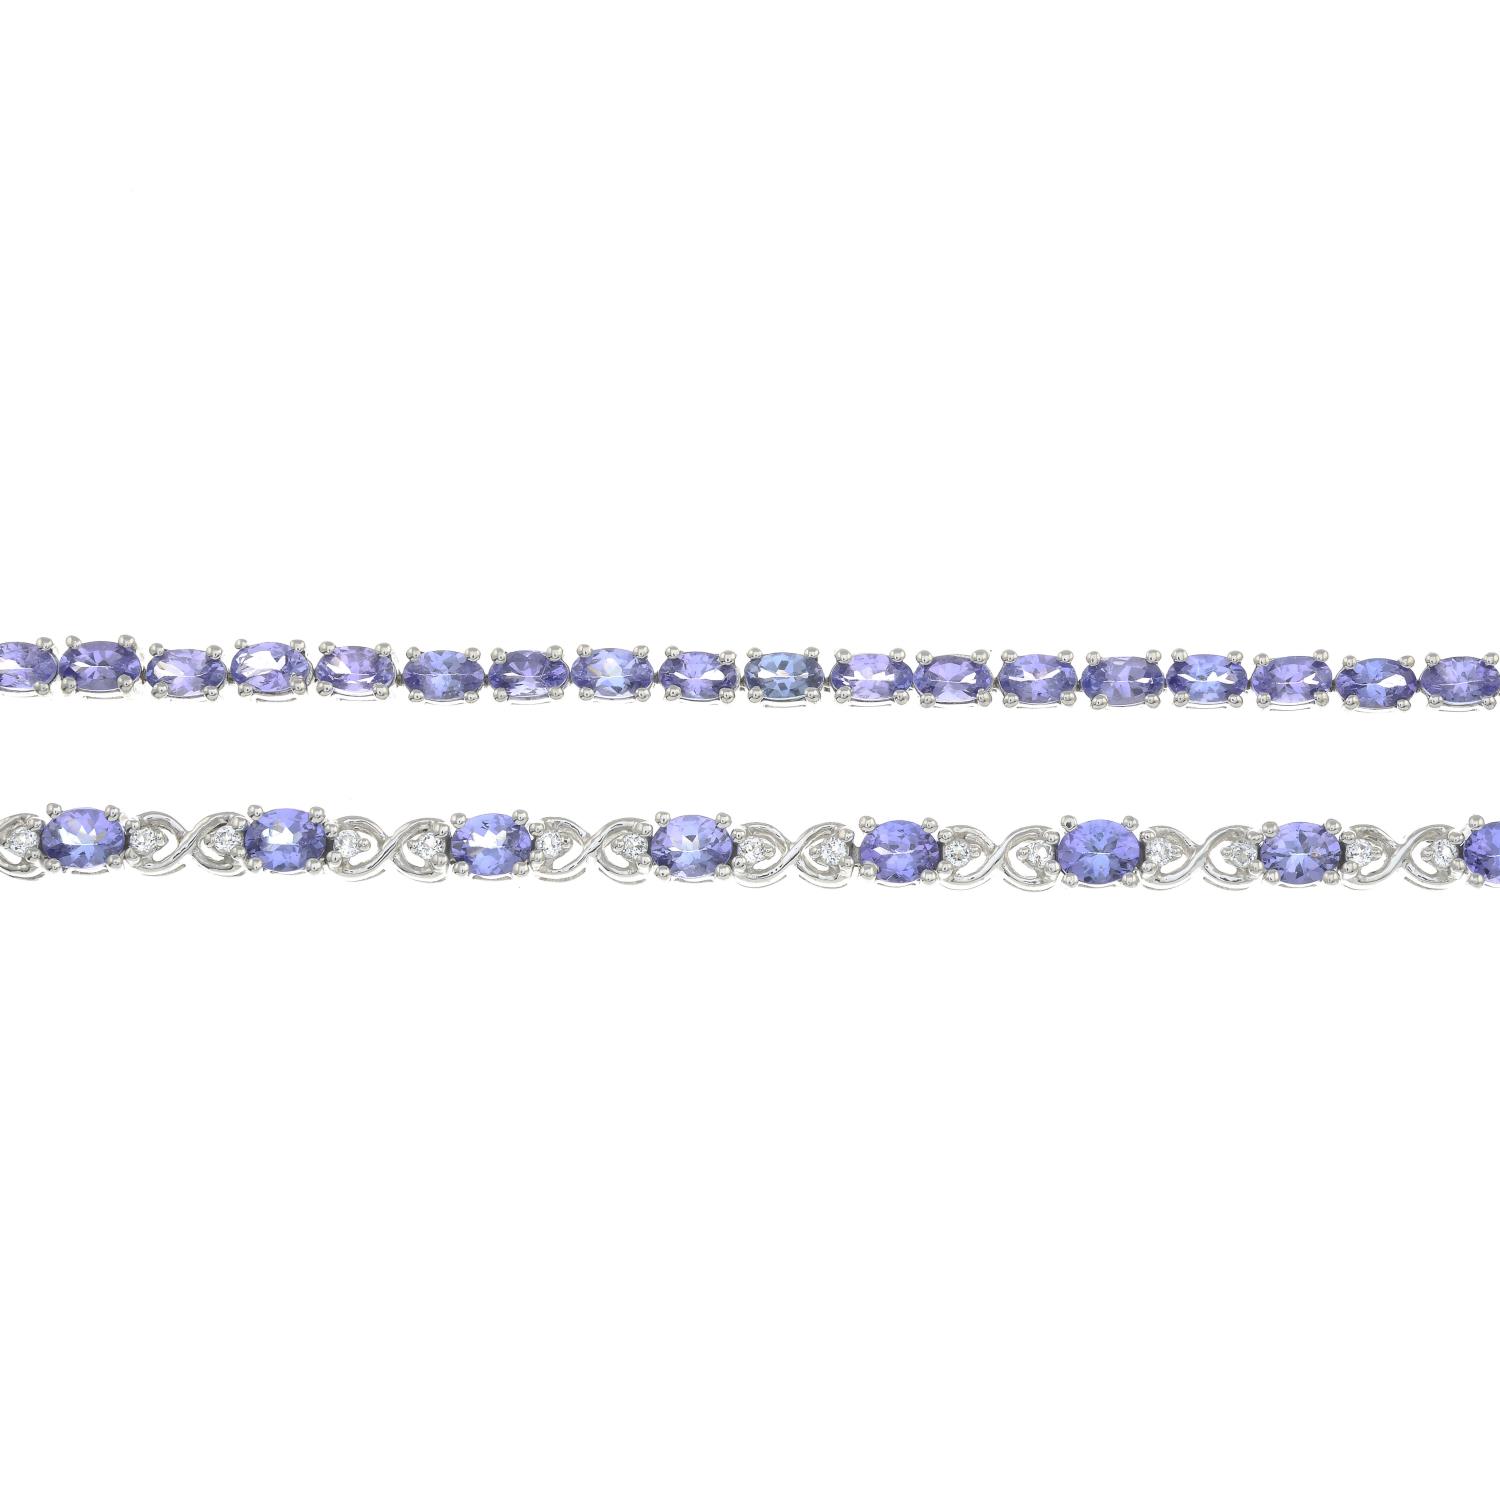 Tanzanite bracelet, hallmarks for Birmingham, 2014, length 20cms, 11.1gms.